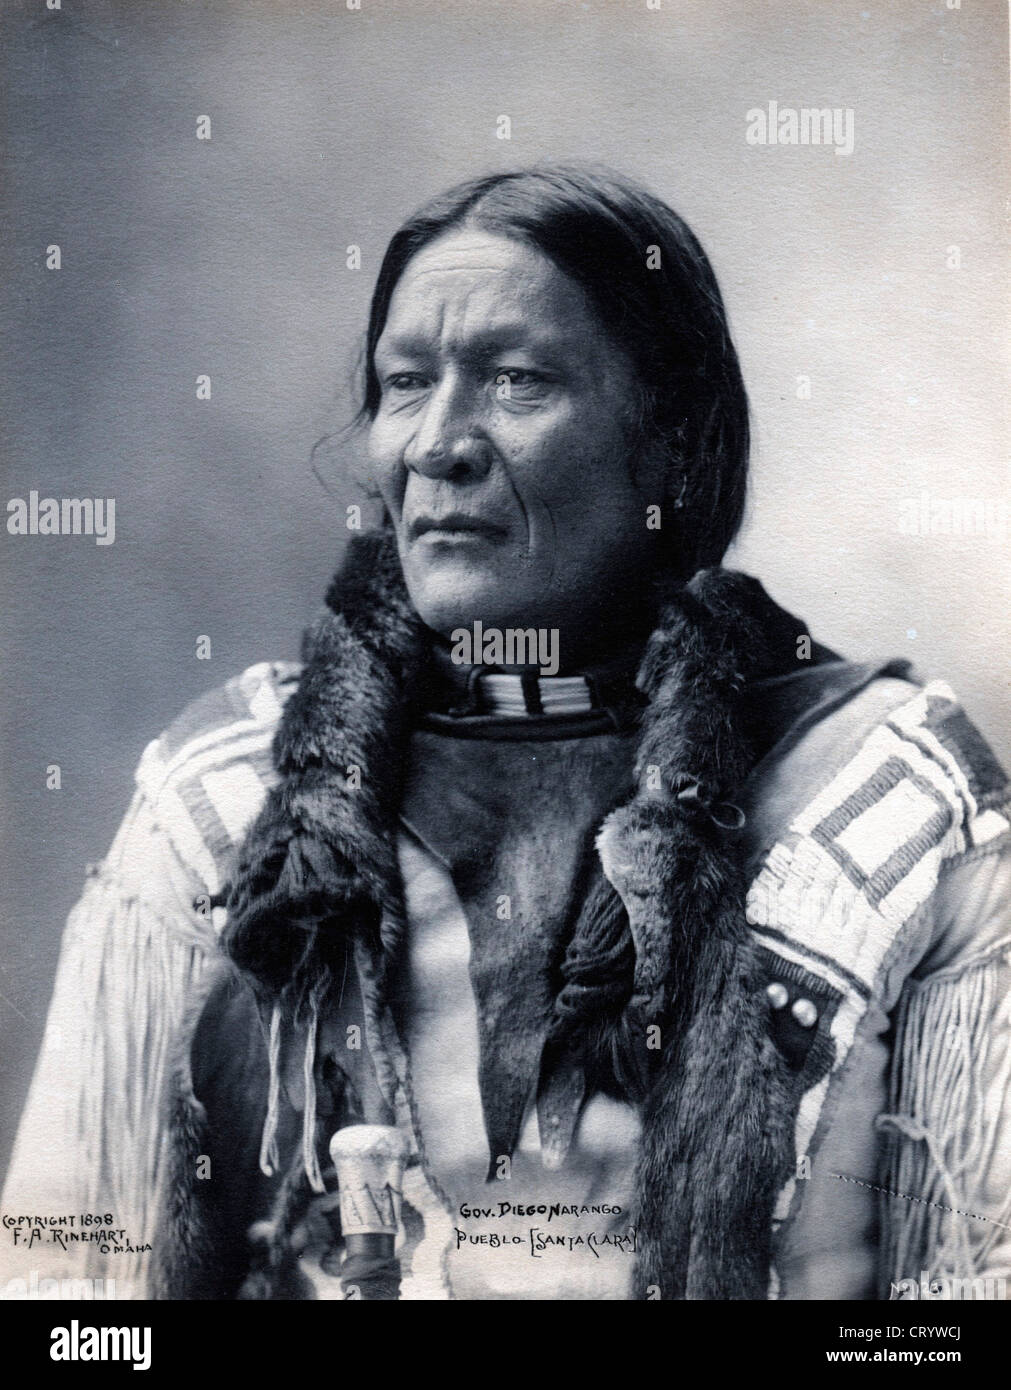 Portrait of Gov. Diego Narango- Pueblo Santa Clara, 1899, by F.A. Rinehart Stock Photo